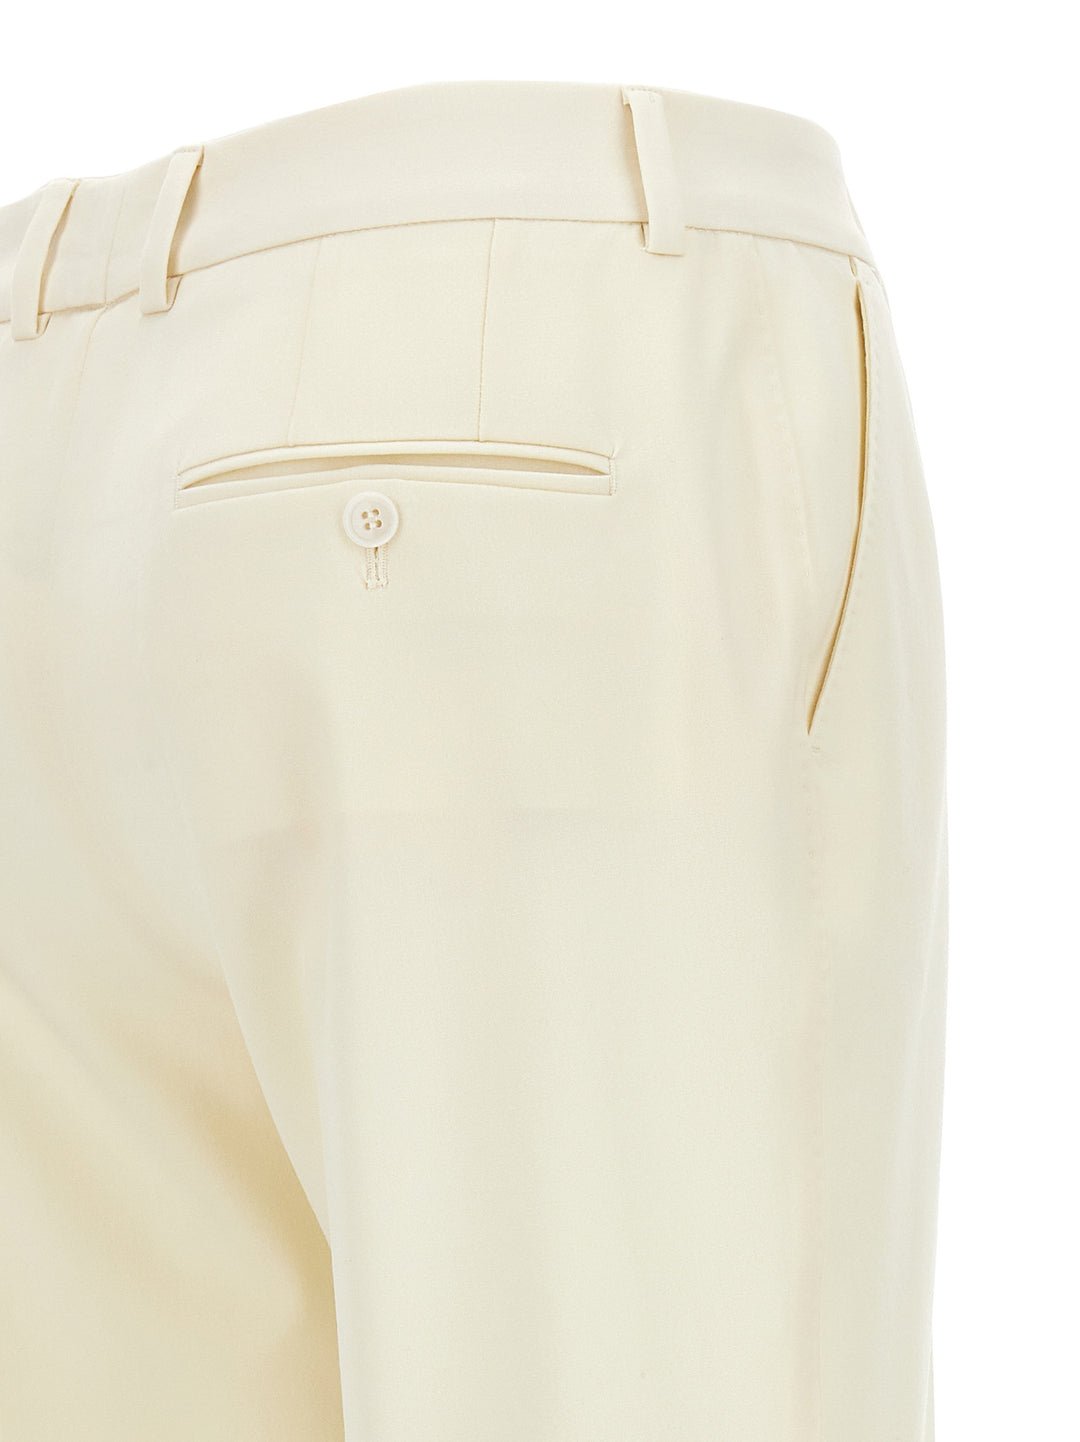 Essential Pantaloni Bianco